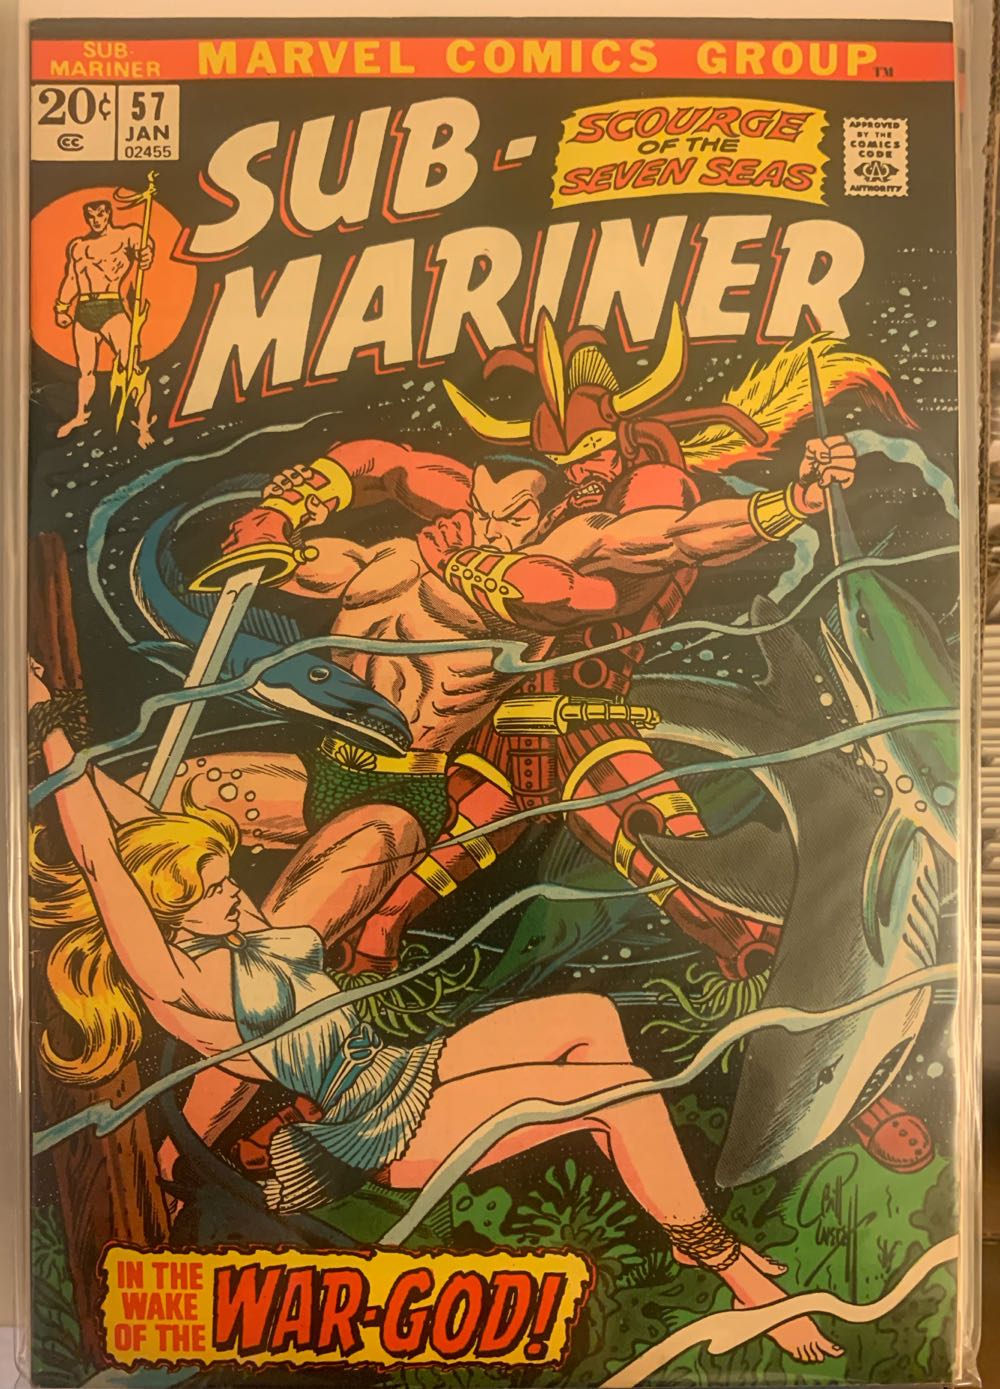 Sub-mariner, The Prince Namor - Marvel Comics Group (57 - Jan 1973) comic book collectible - Main Image 3